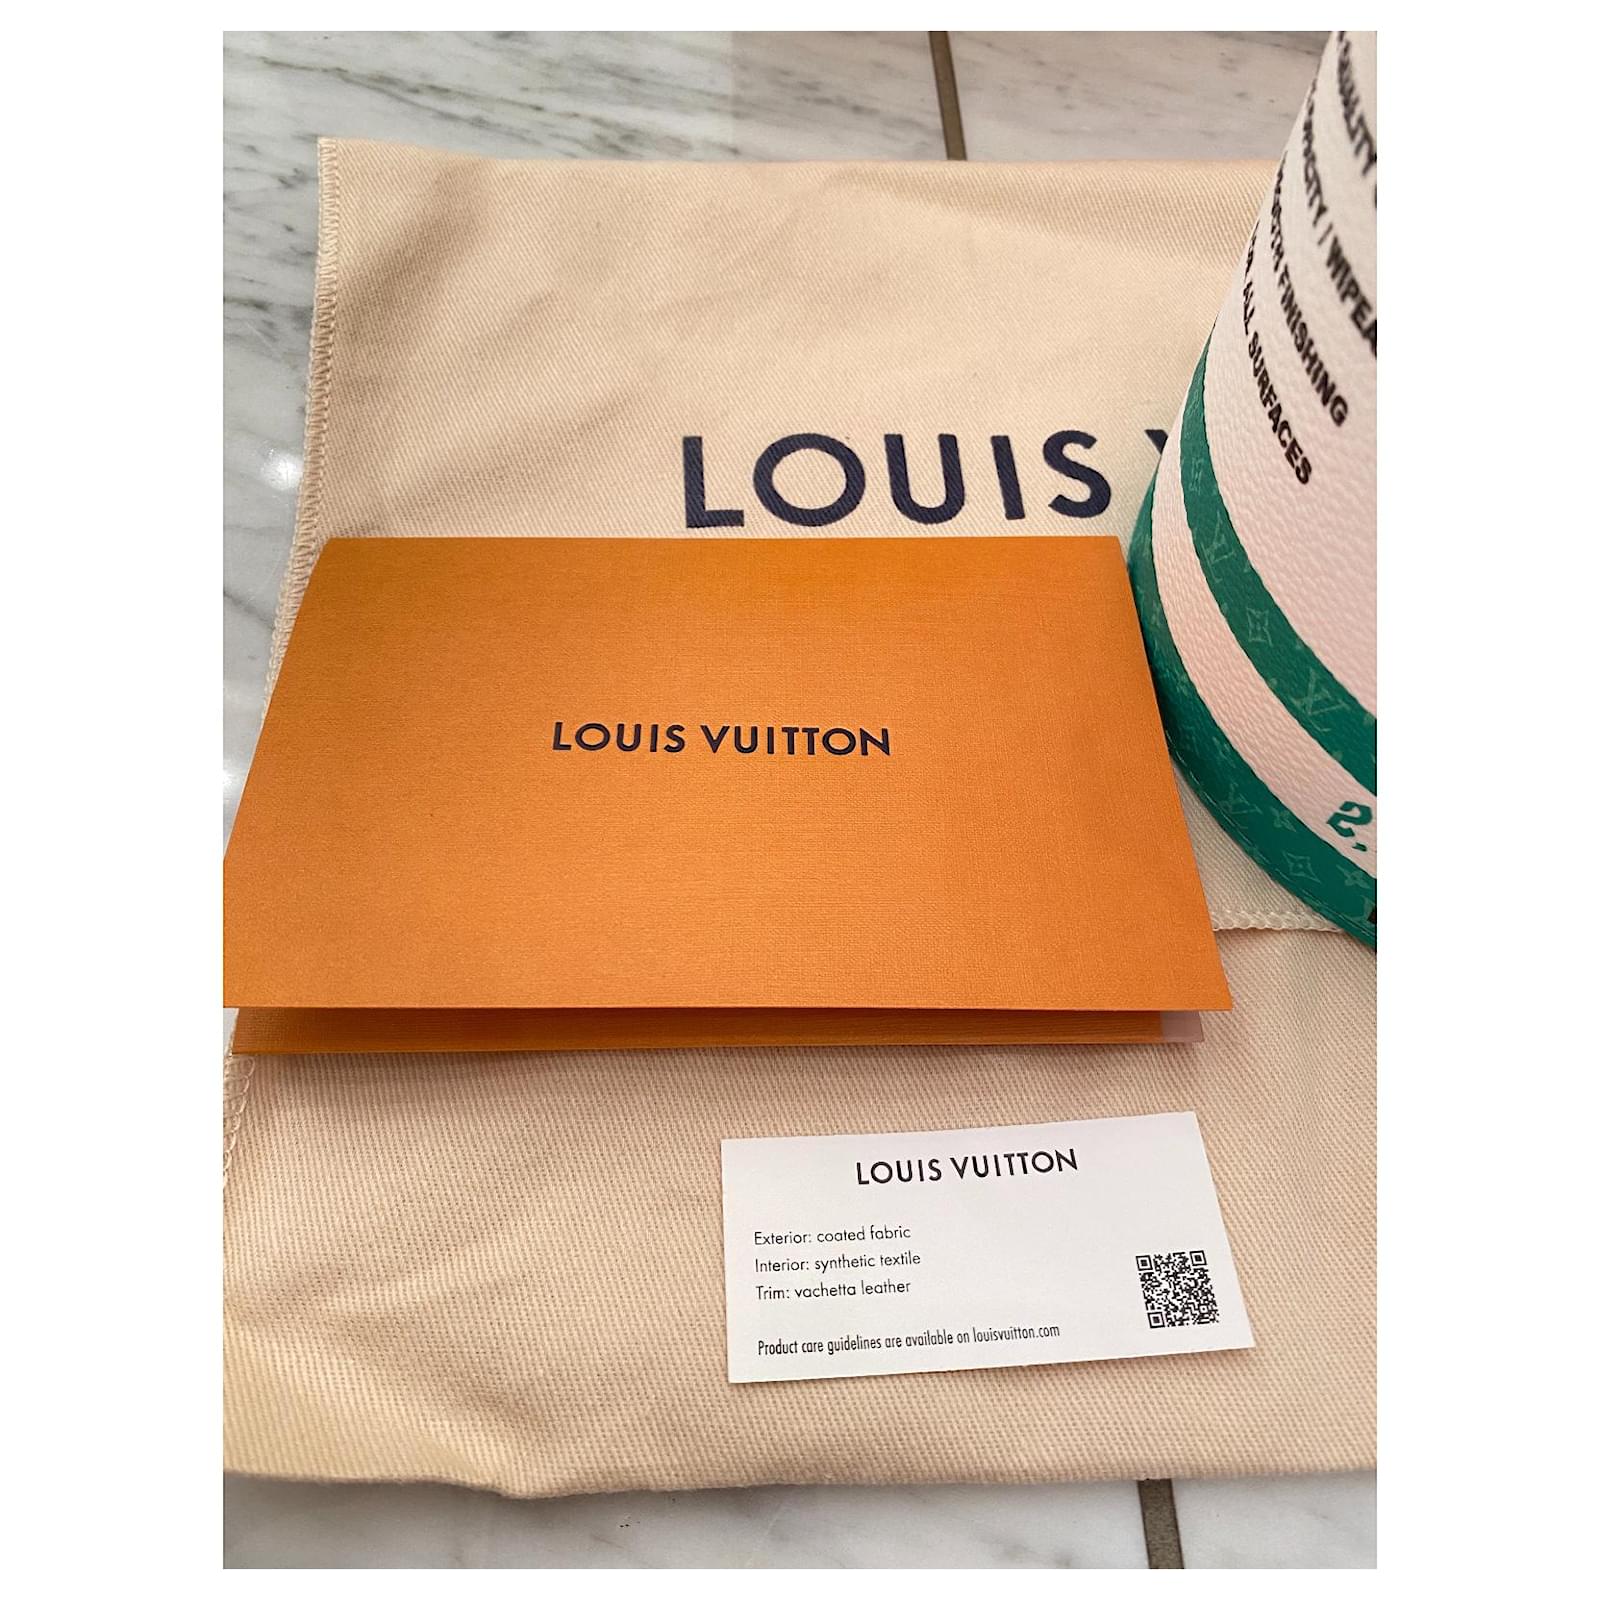 Handbags Louis Vuitton Louis Vuitton Virgil Abloh Paint Can Green